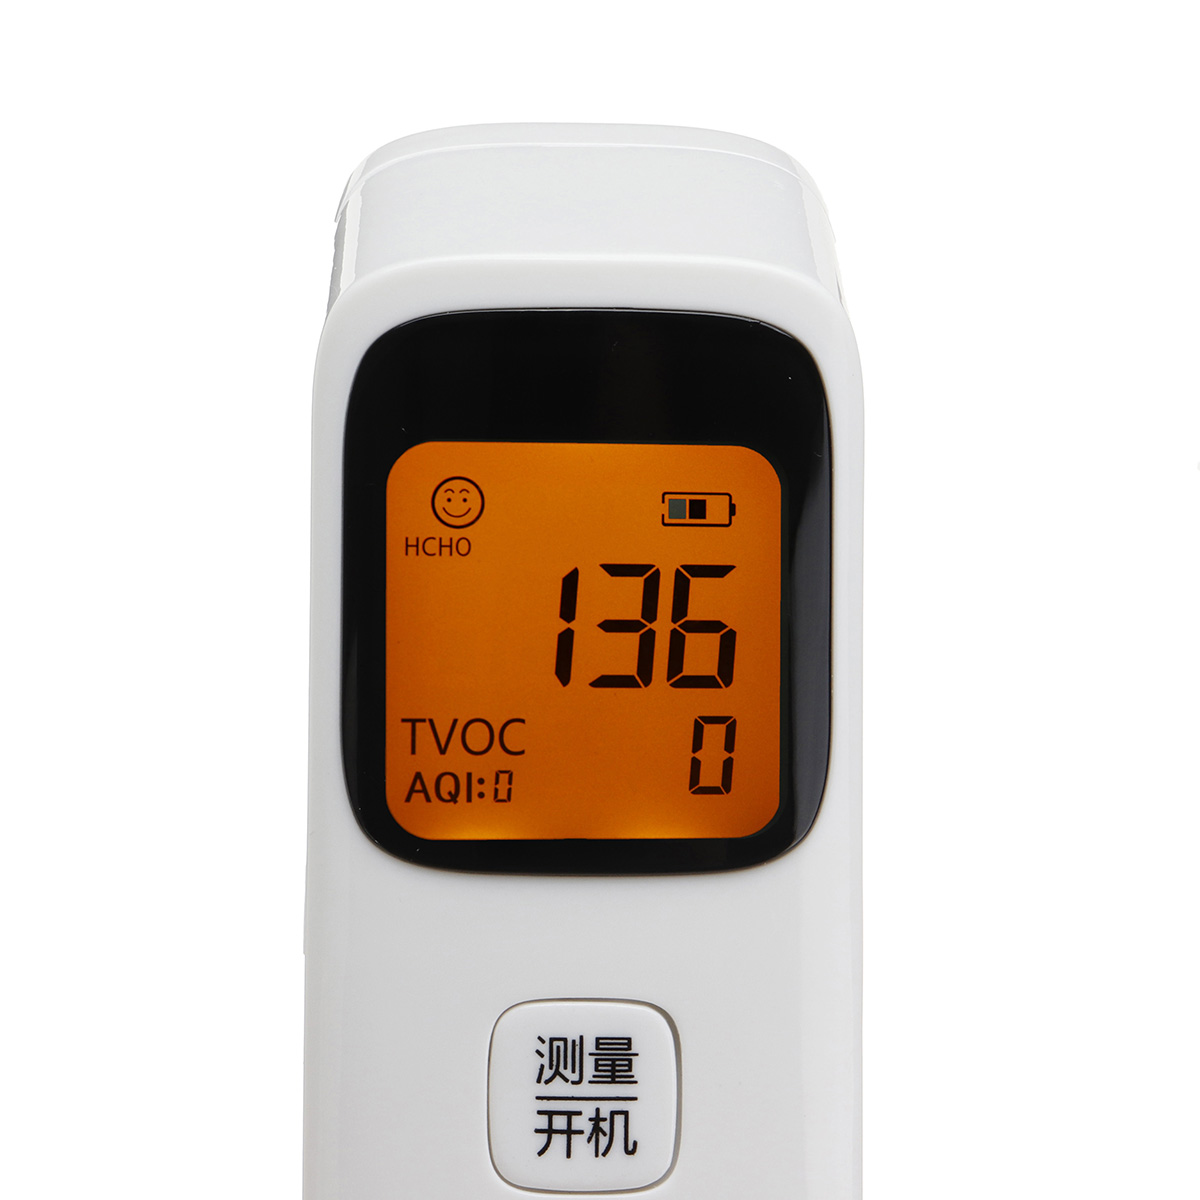 Smart-Air-Formaldehyde-Gas-Tester-Monitors-Tester-For-HCHOTVOCAQI-Detection-1468235-7